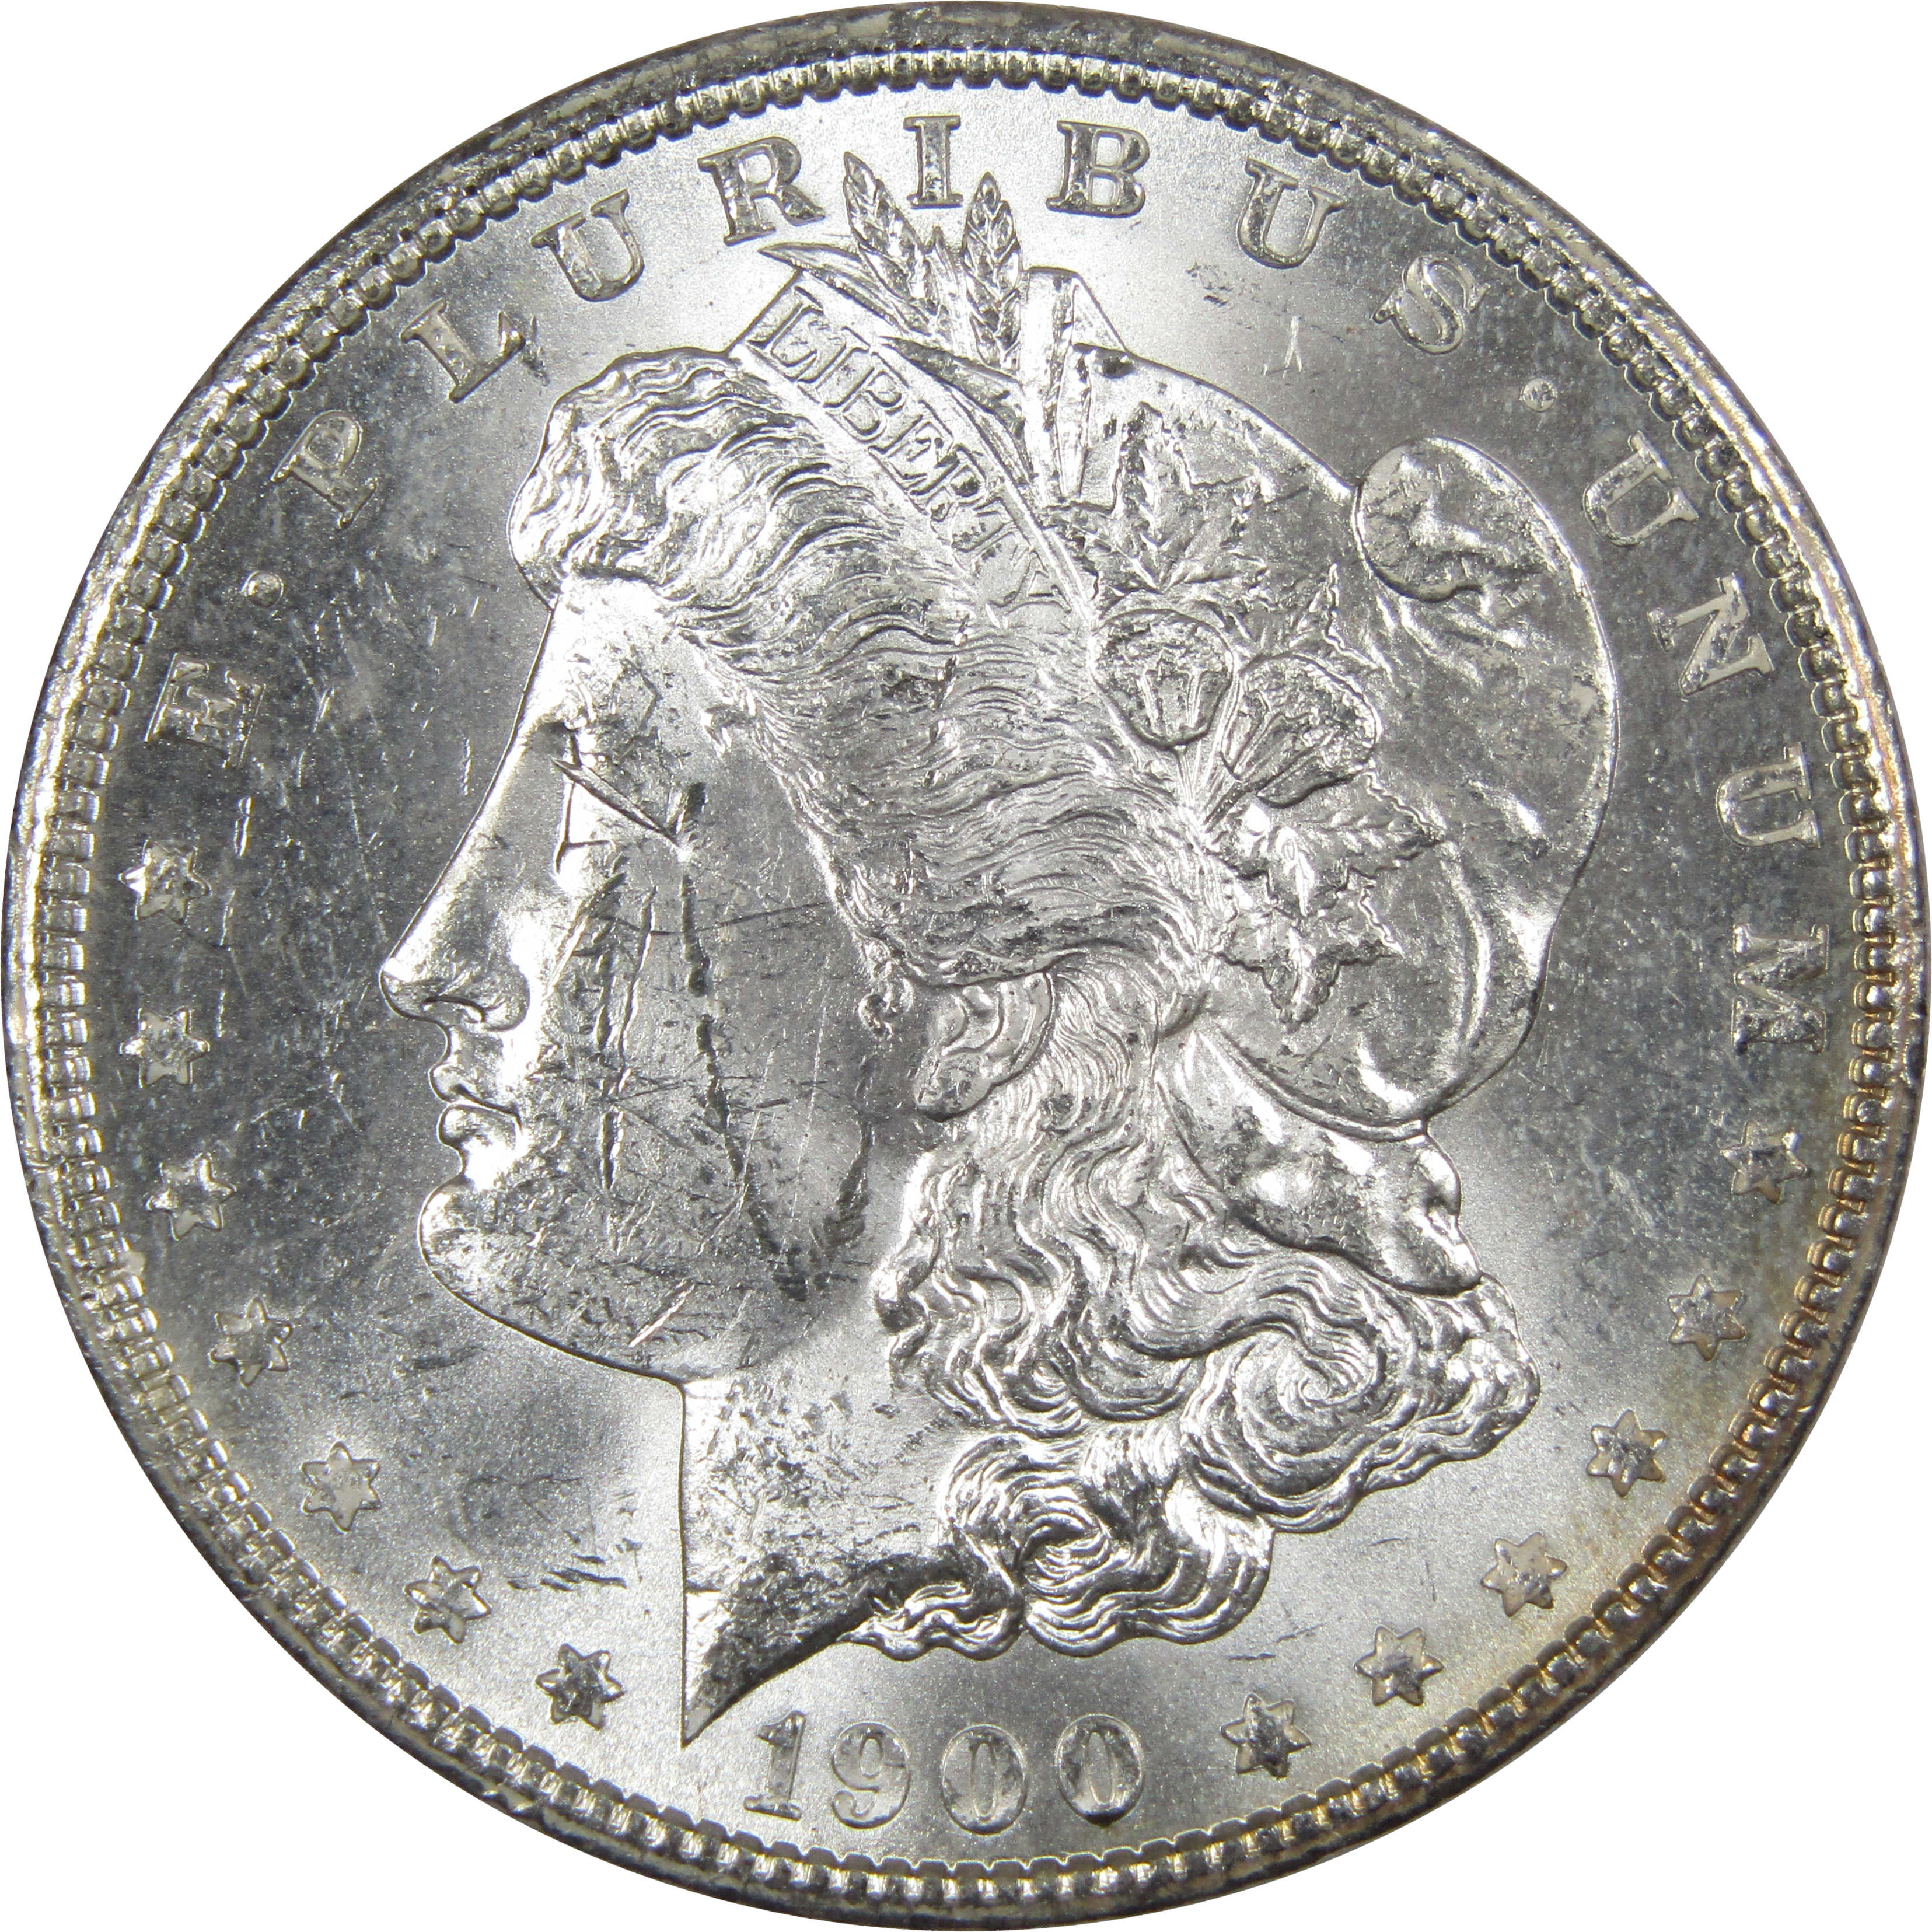 1900 O Morgan Dollar BU Uncirculated Mint State 90% Silver SKU:IPC9800 - Morgan coin - Morgan silver dollar - Morgan silver dollar for sale - Profile Coins &amp; Collectibles